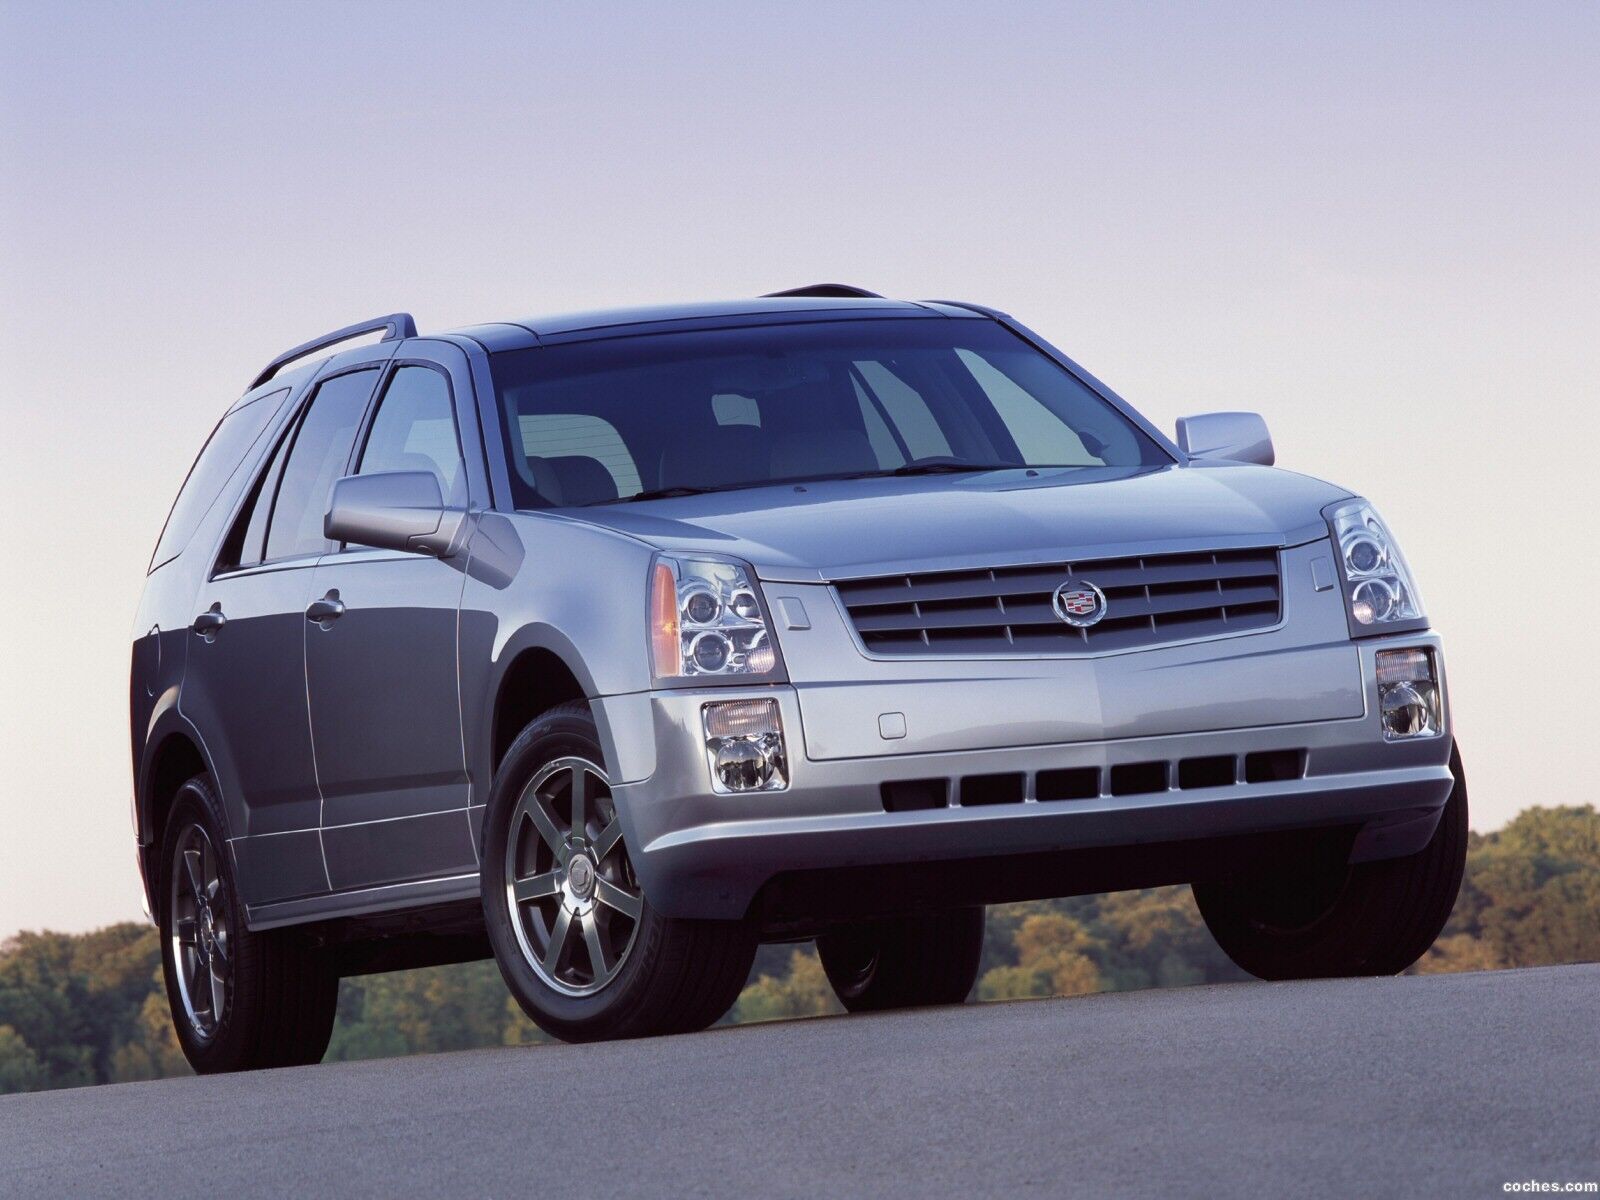 Cadillac SRX 2003 - 2009 Specs and Technical Data, Fuel Consumption